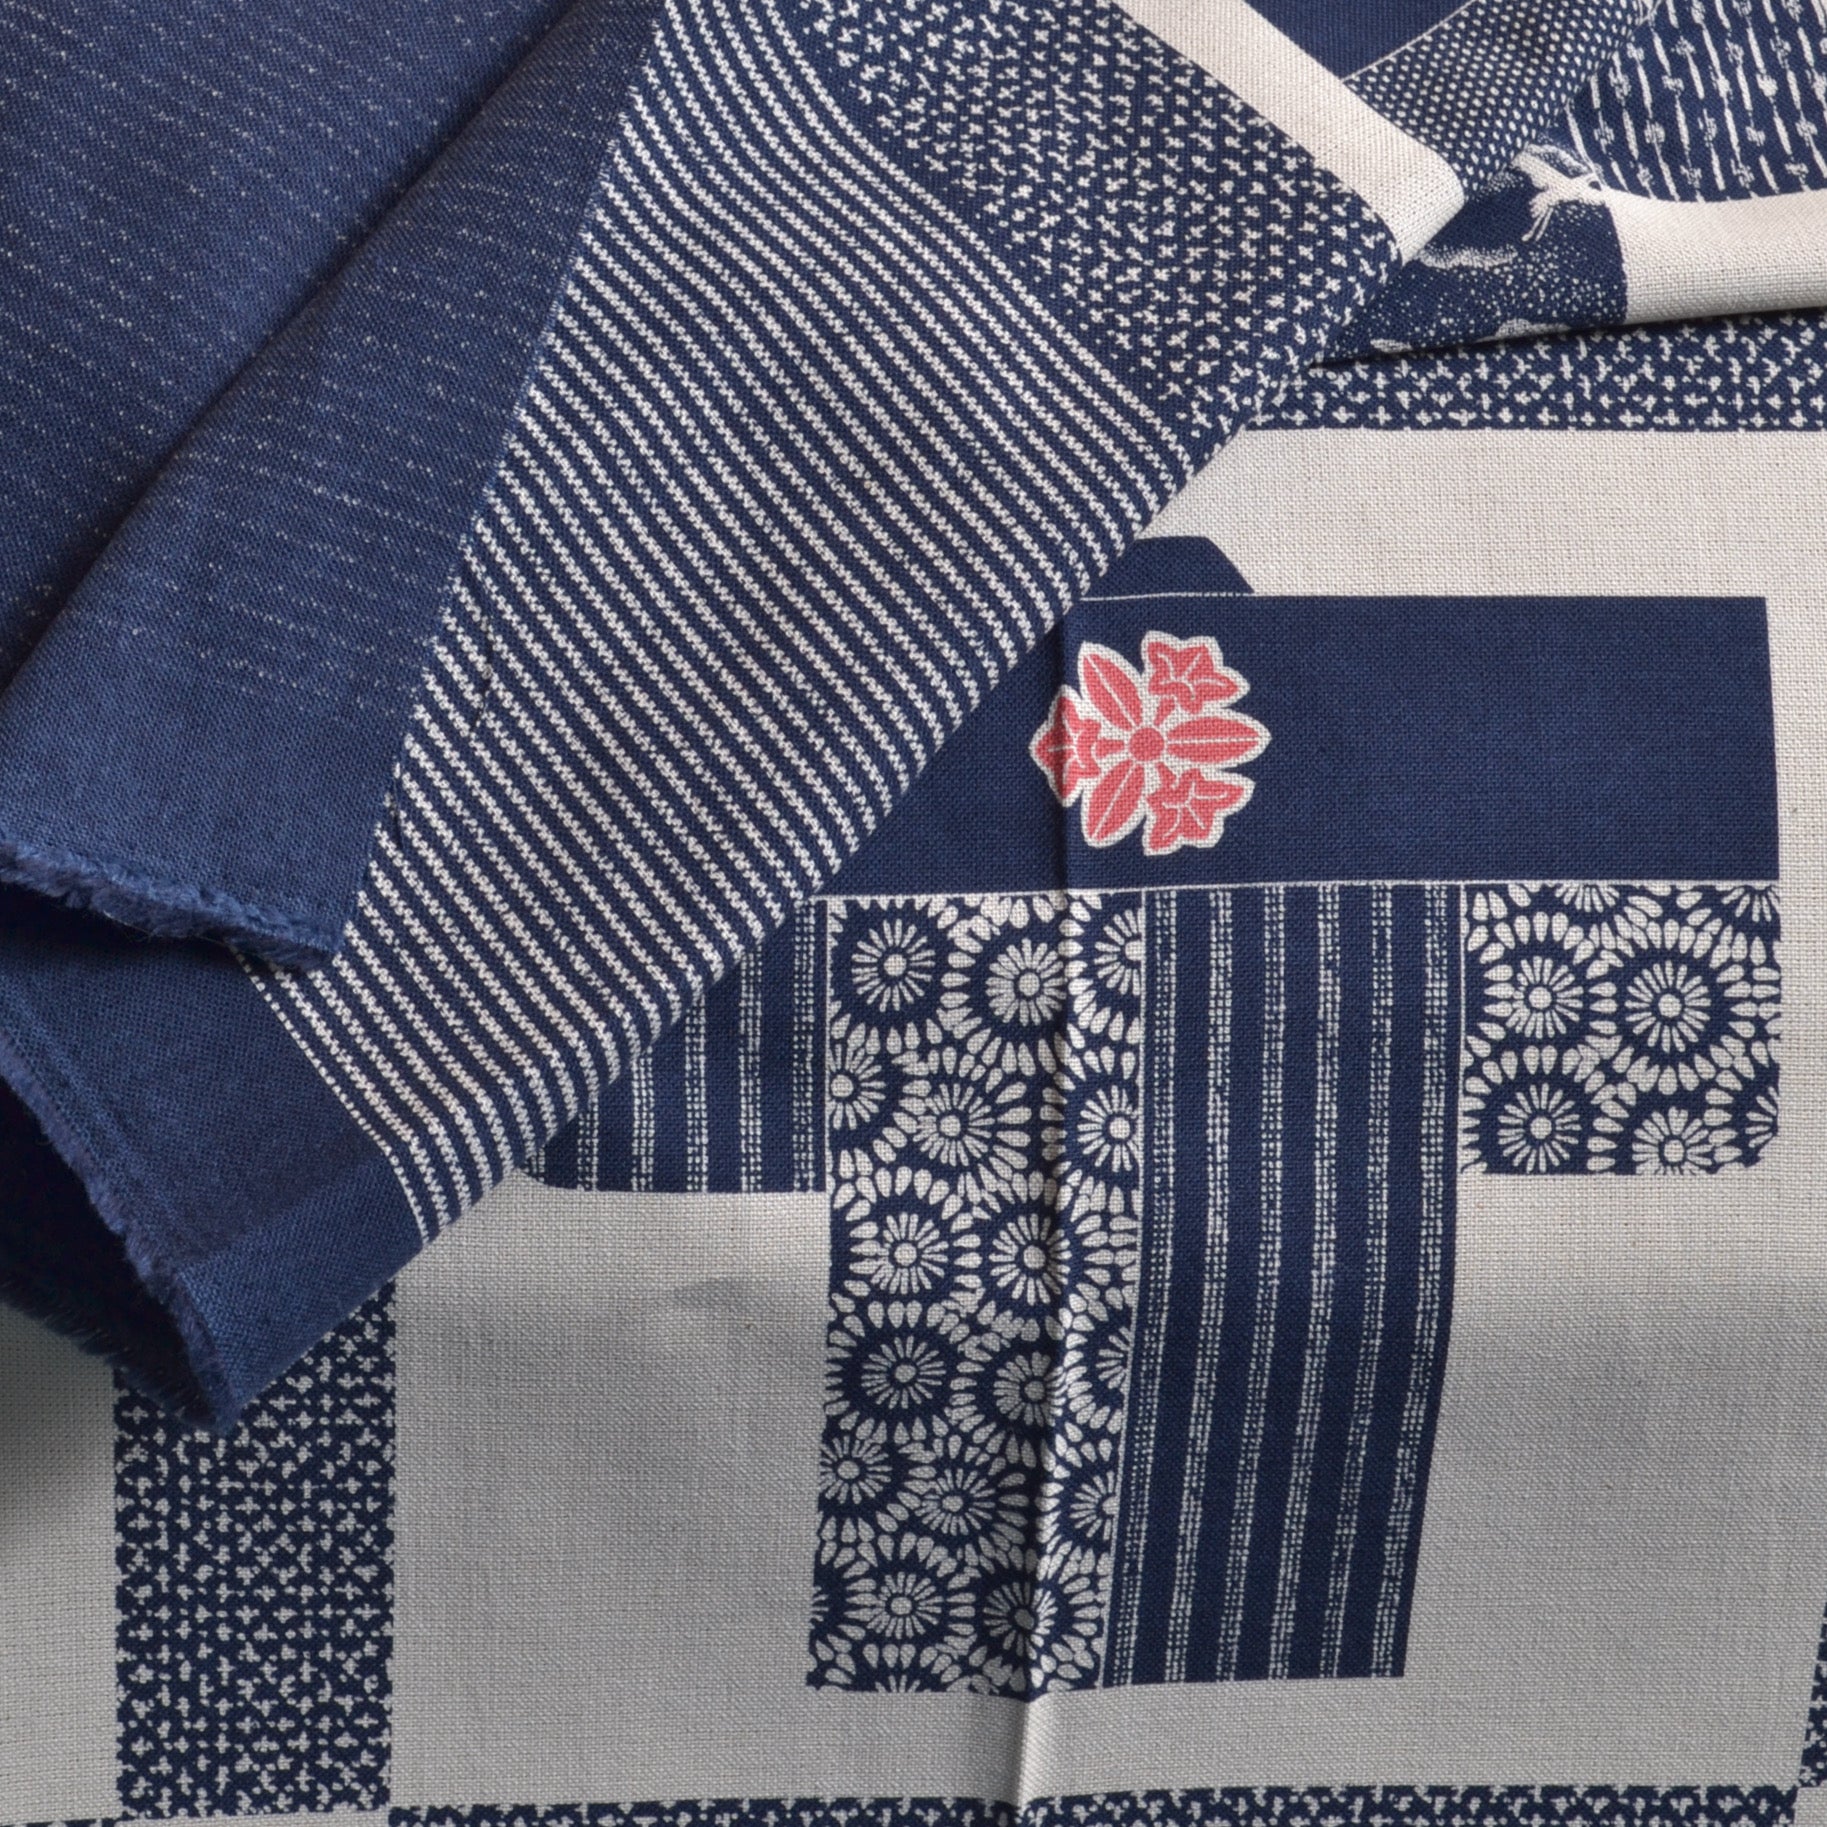 Wagara Japanese Cotton Fabric